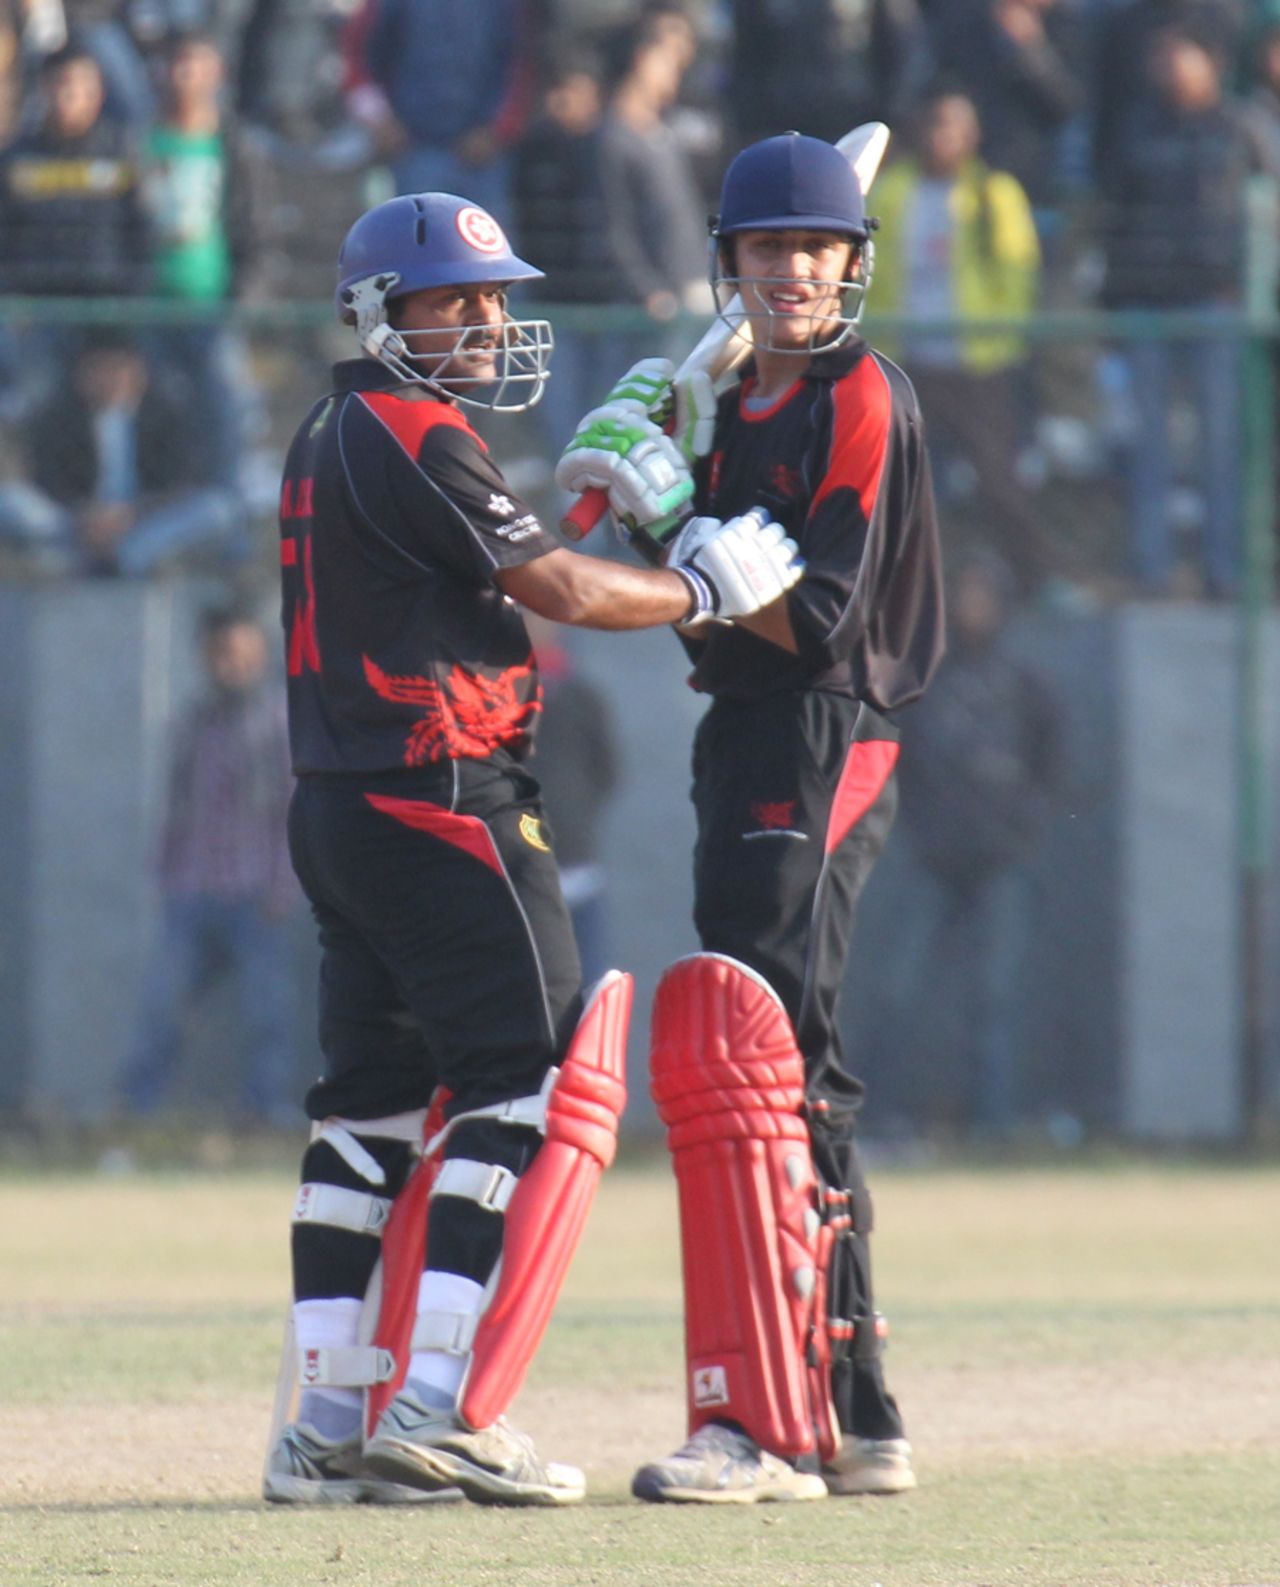 Munir Dar and Aizaz Khan shared in a match-winning partnership of 67 runs against Oman in the ACC Twenty20 Cup 2011 semi-final at Kathmandu on 9th December 2011